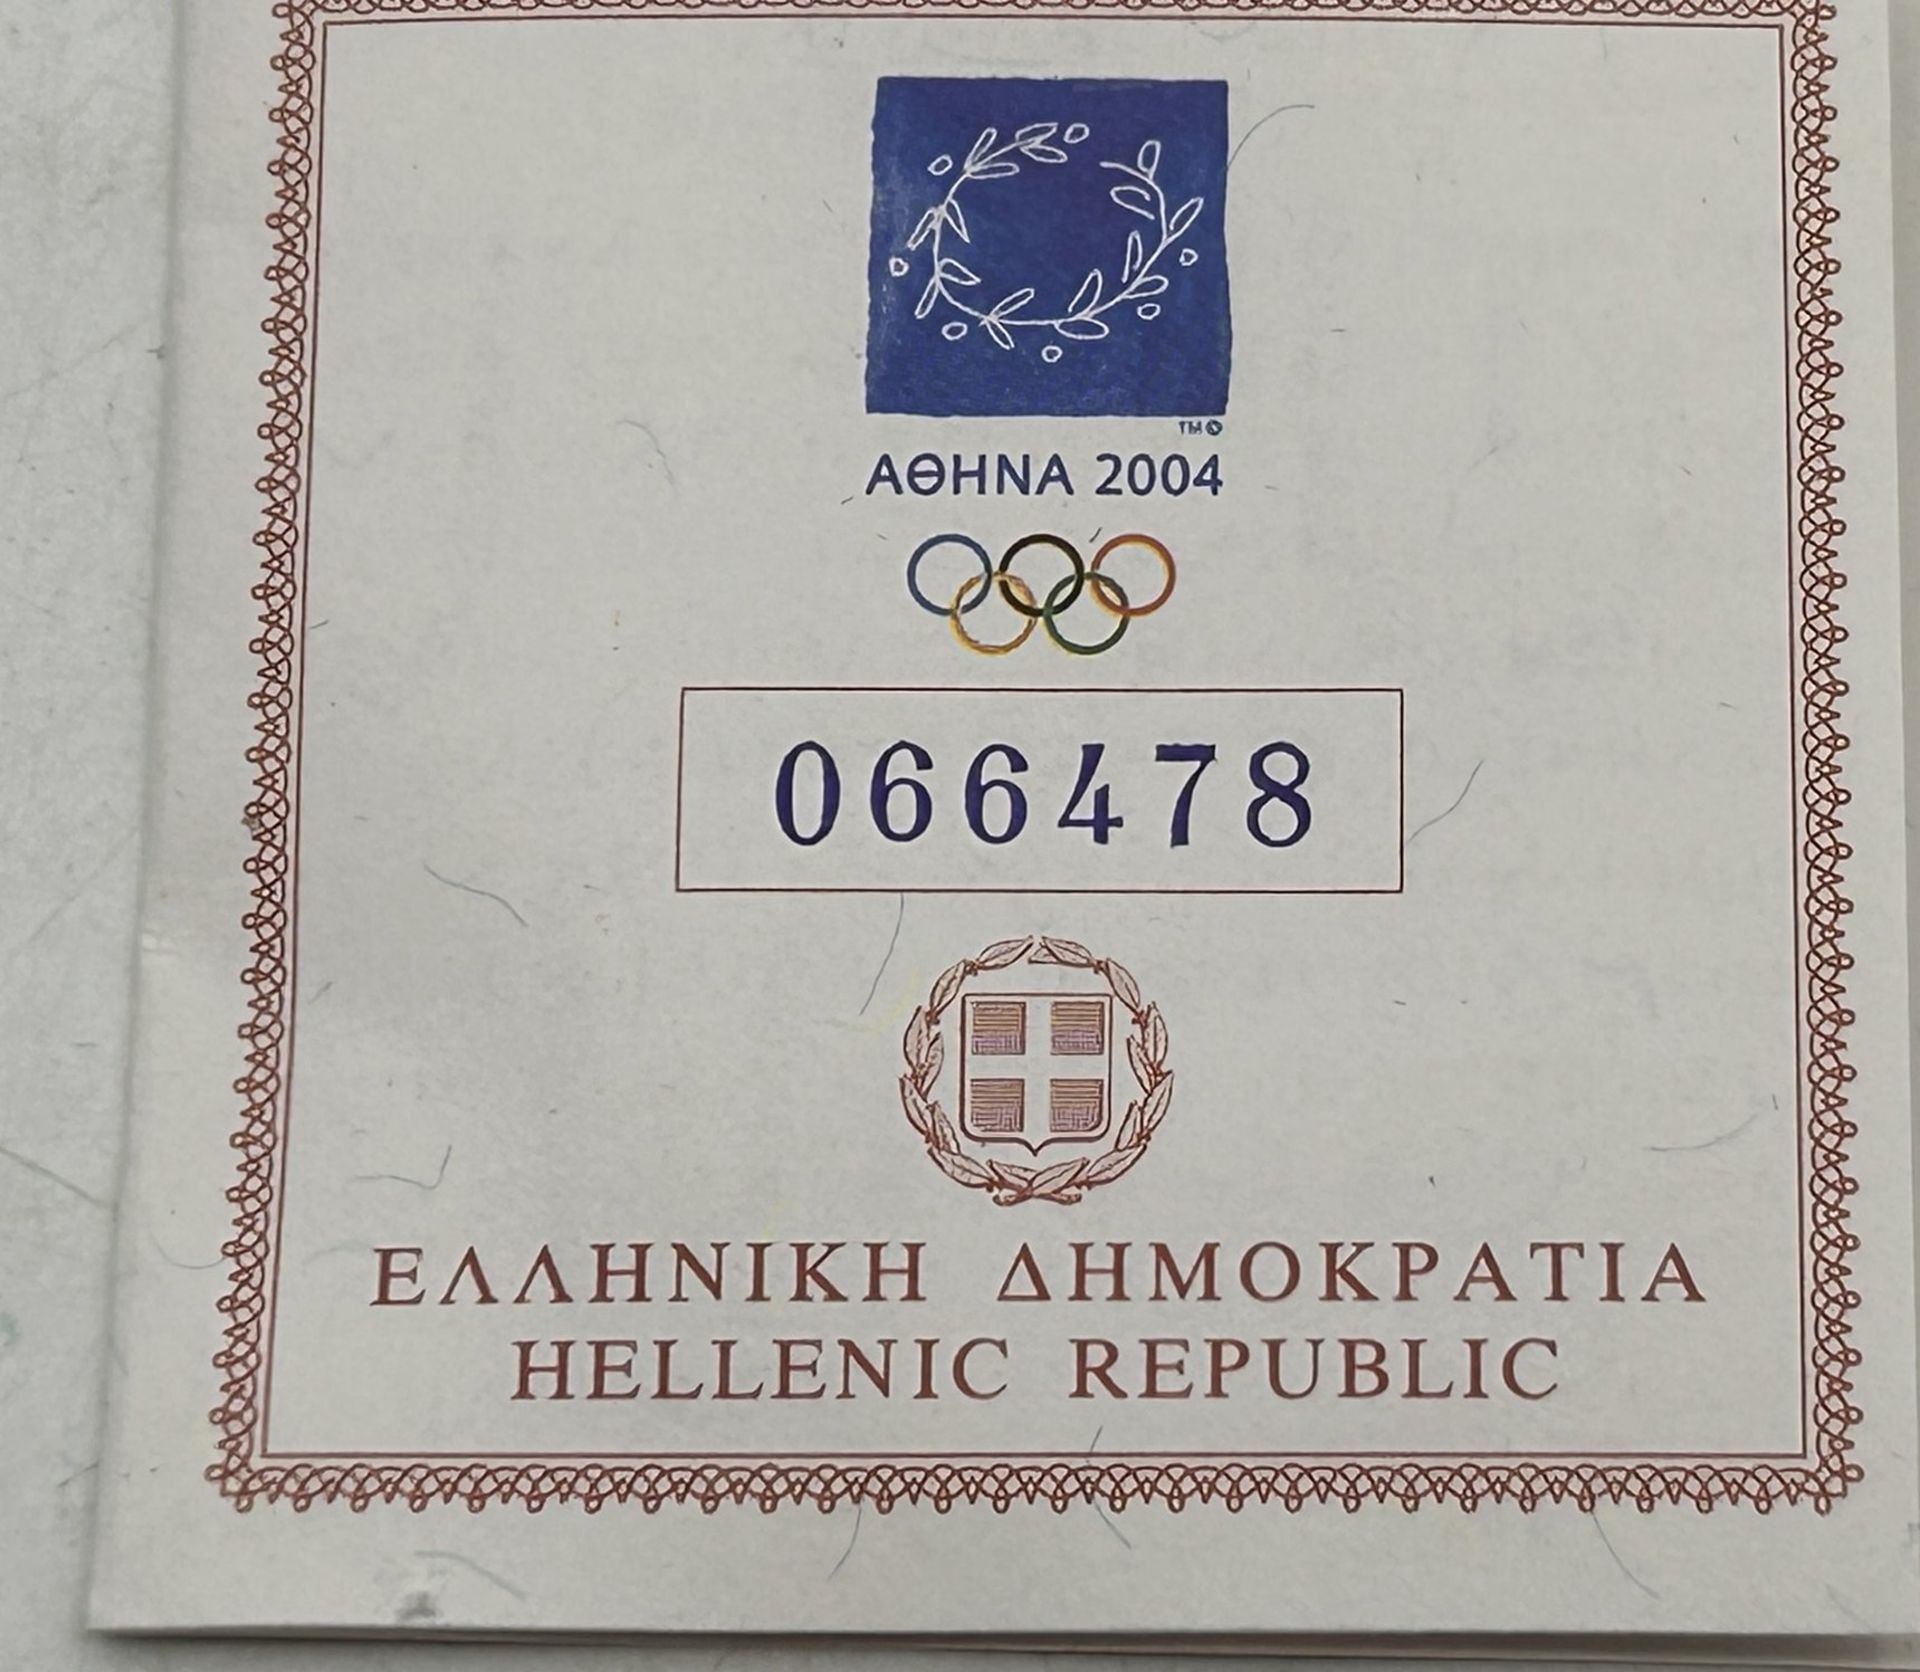 100 Euro Gold-999-, Athen 2004 Griechenland,polierte Platte, Boxed mit polierter Platte, 10 gr. - Image 3 of 5